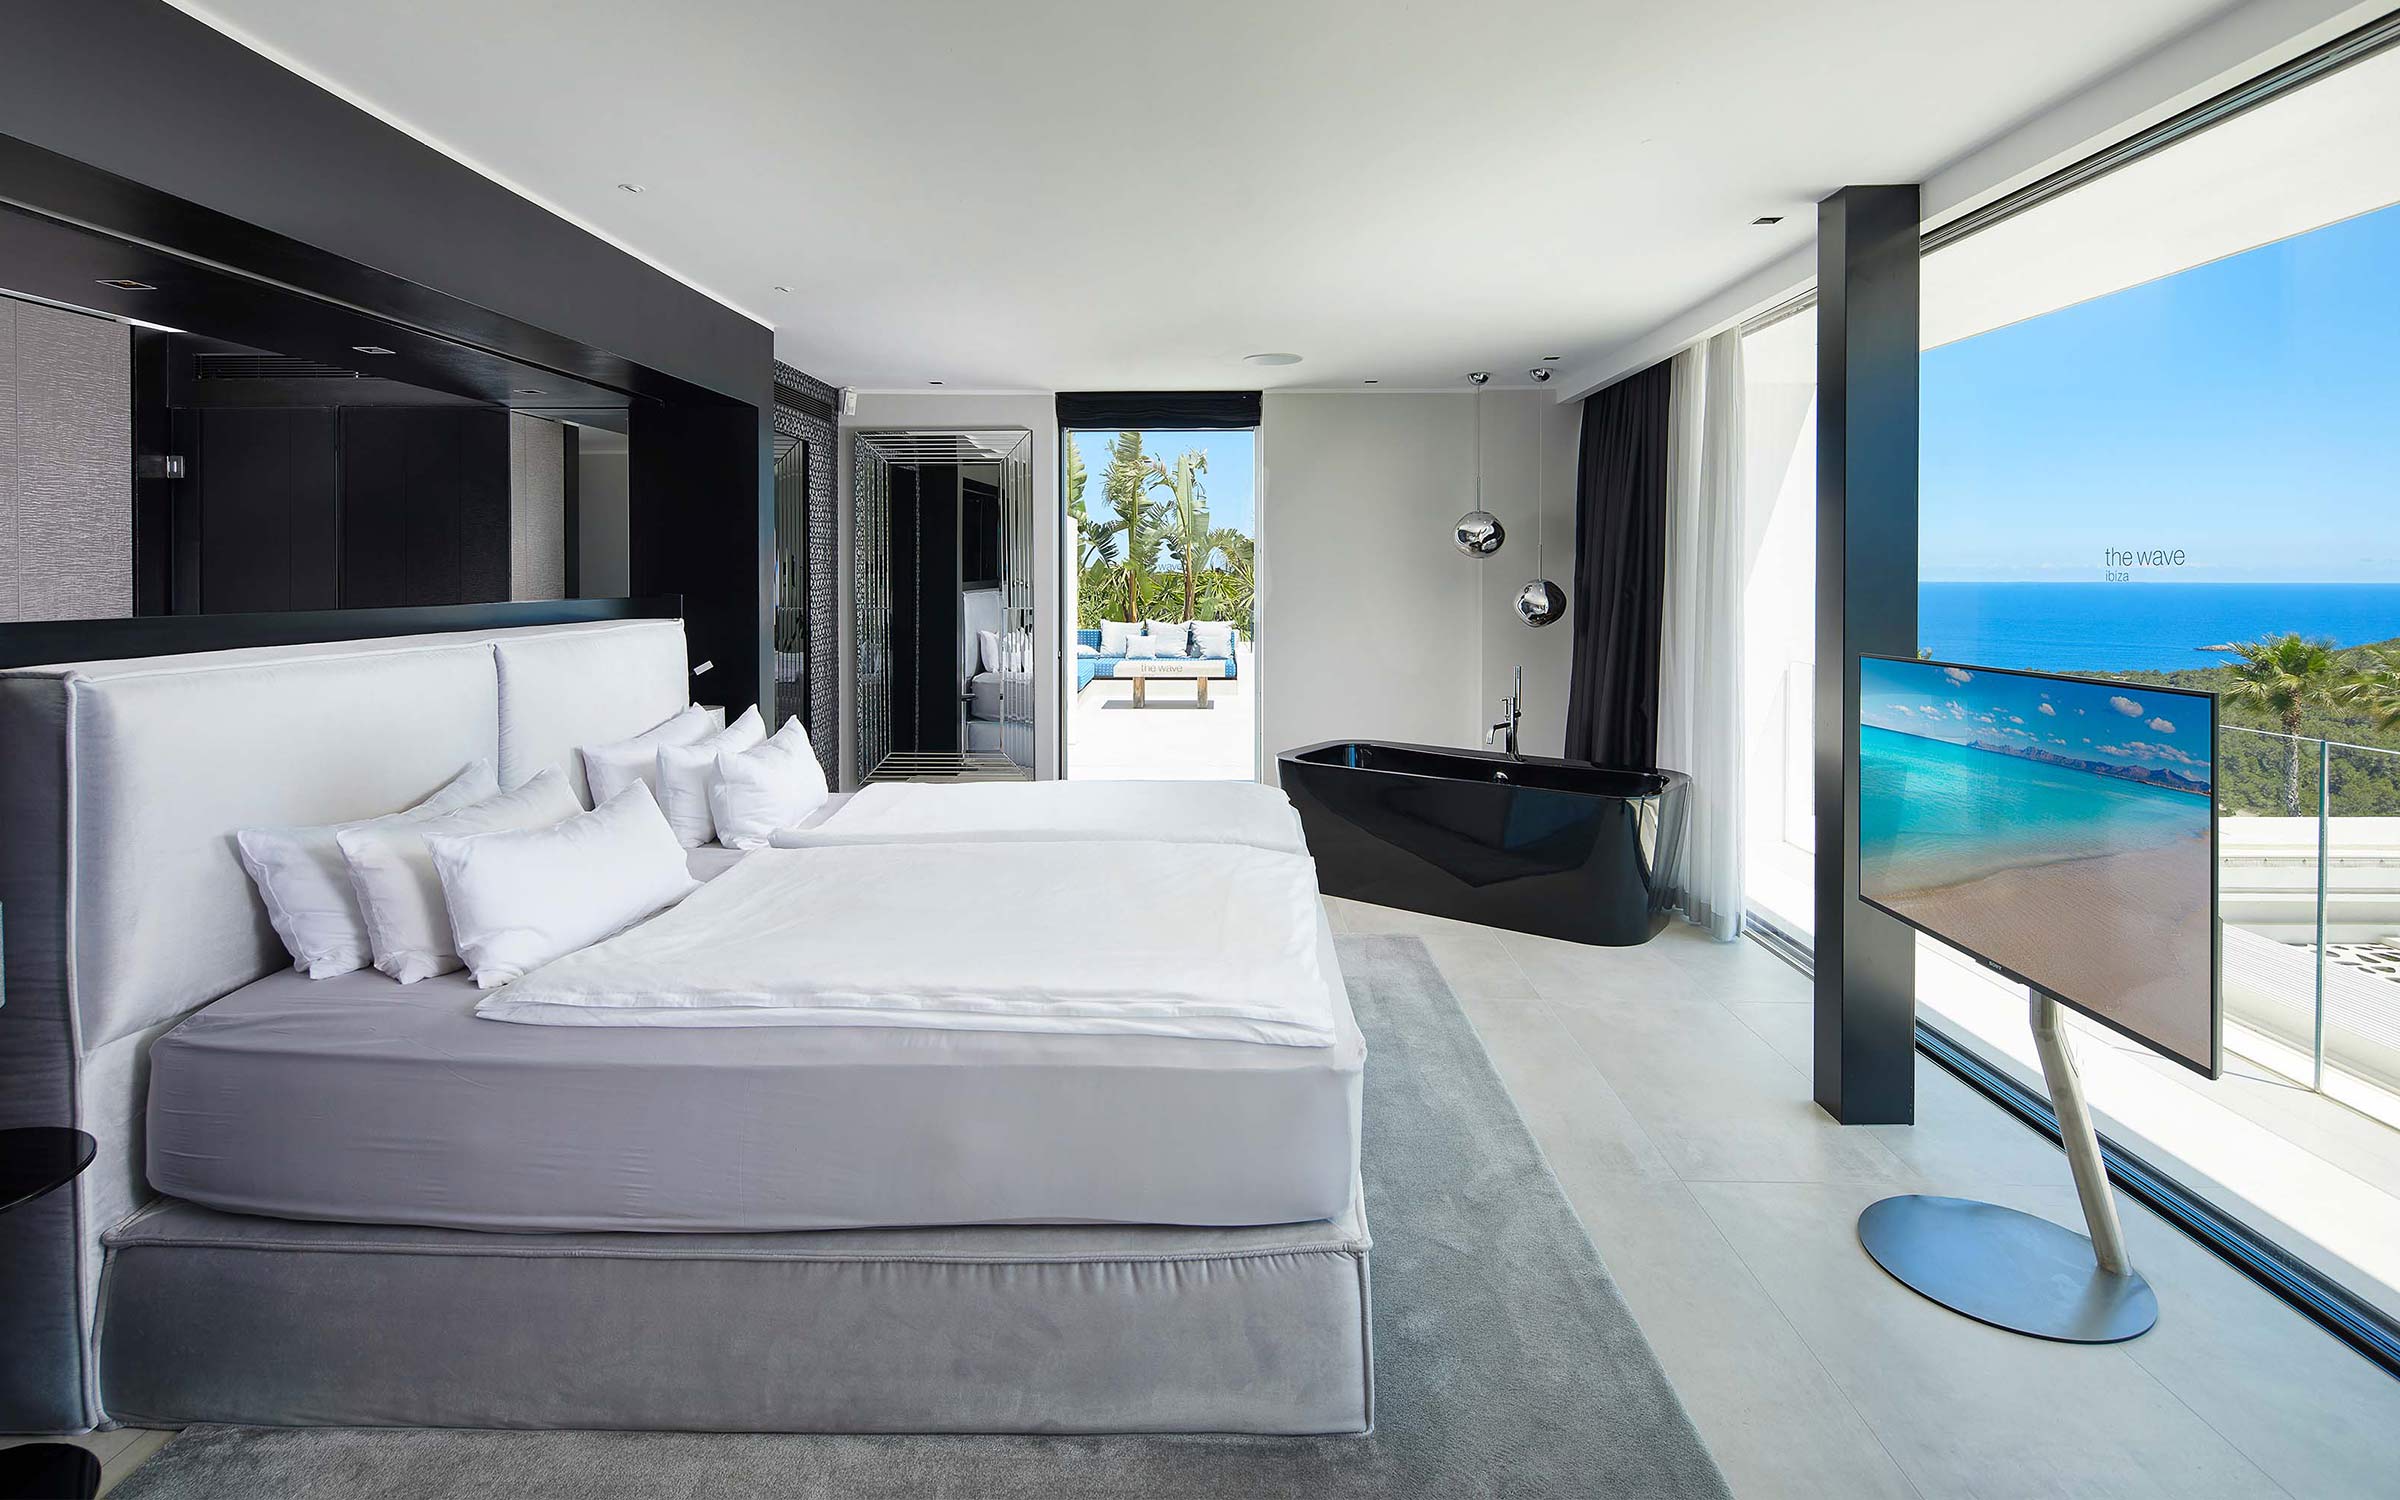 The Wave - Ibiza's most luxury hotel villa